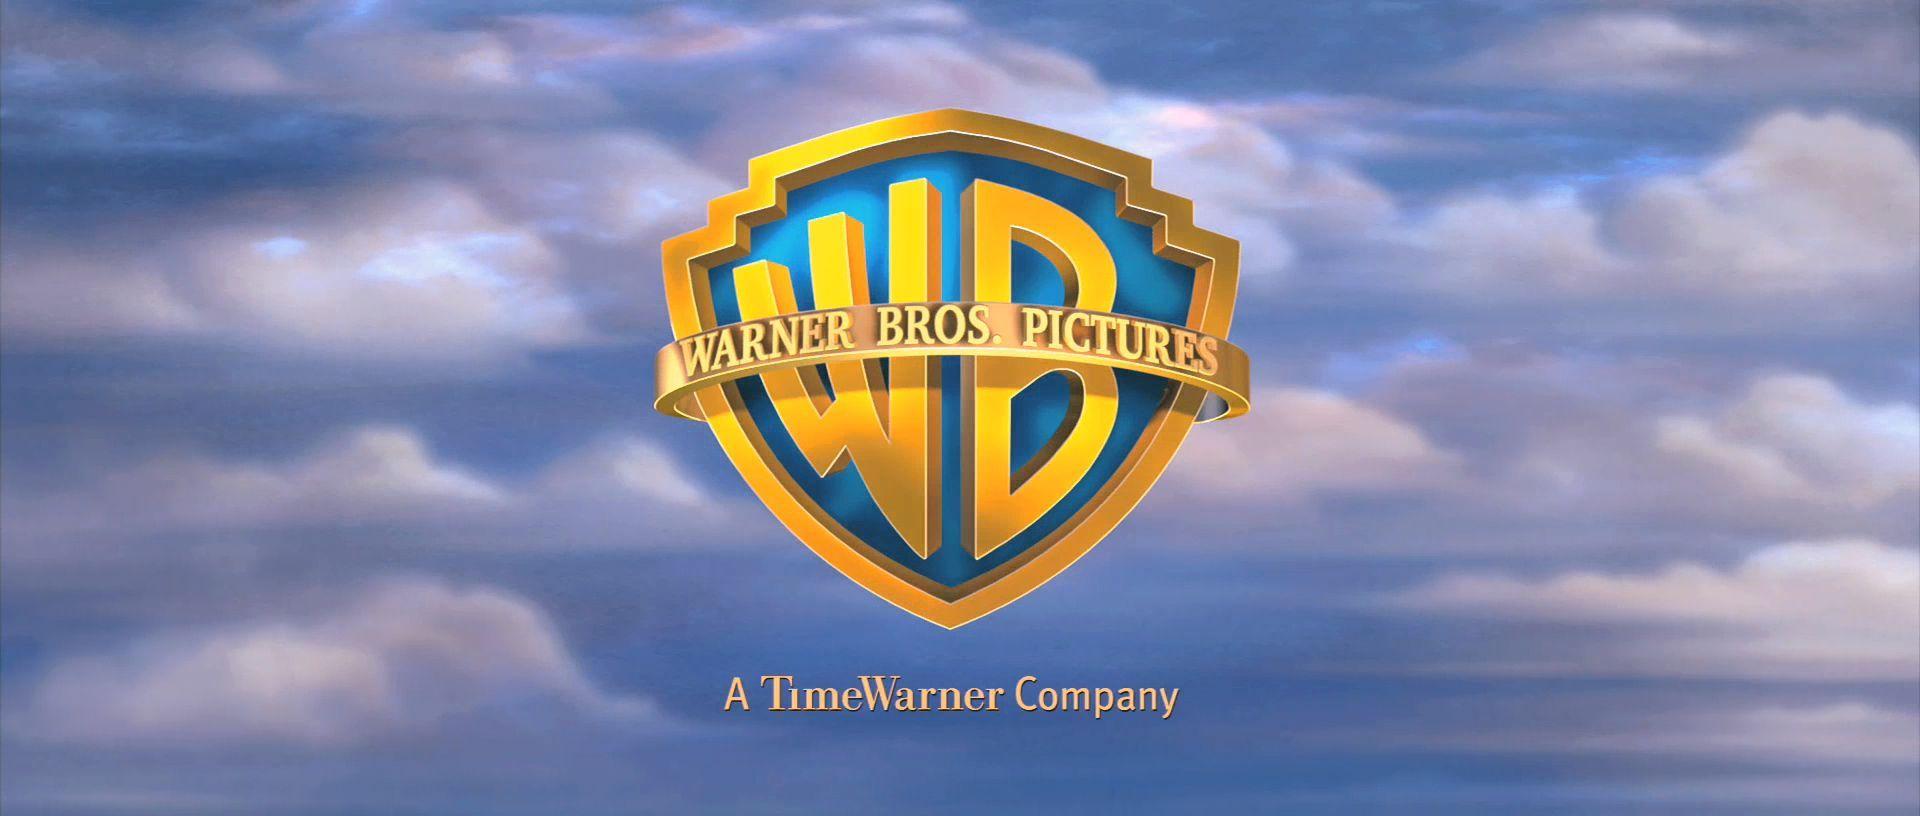 WB Logo - WB logo | Hollywood | Movies, Warner bros, Movies online